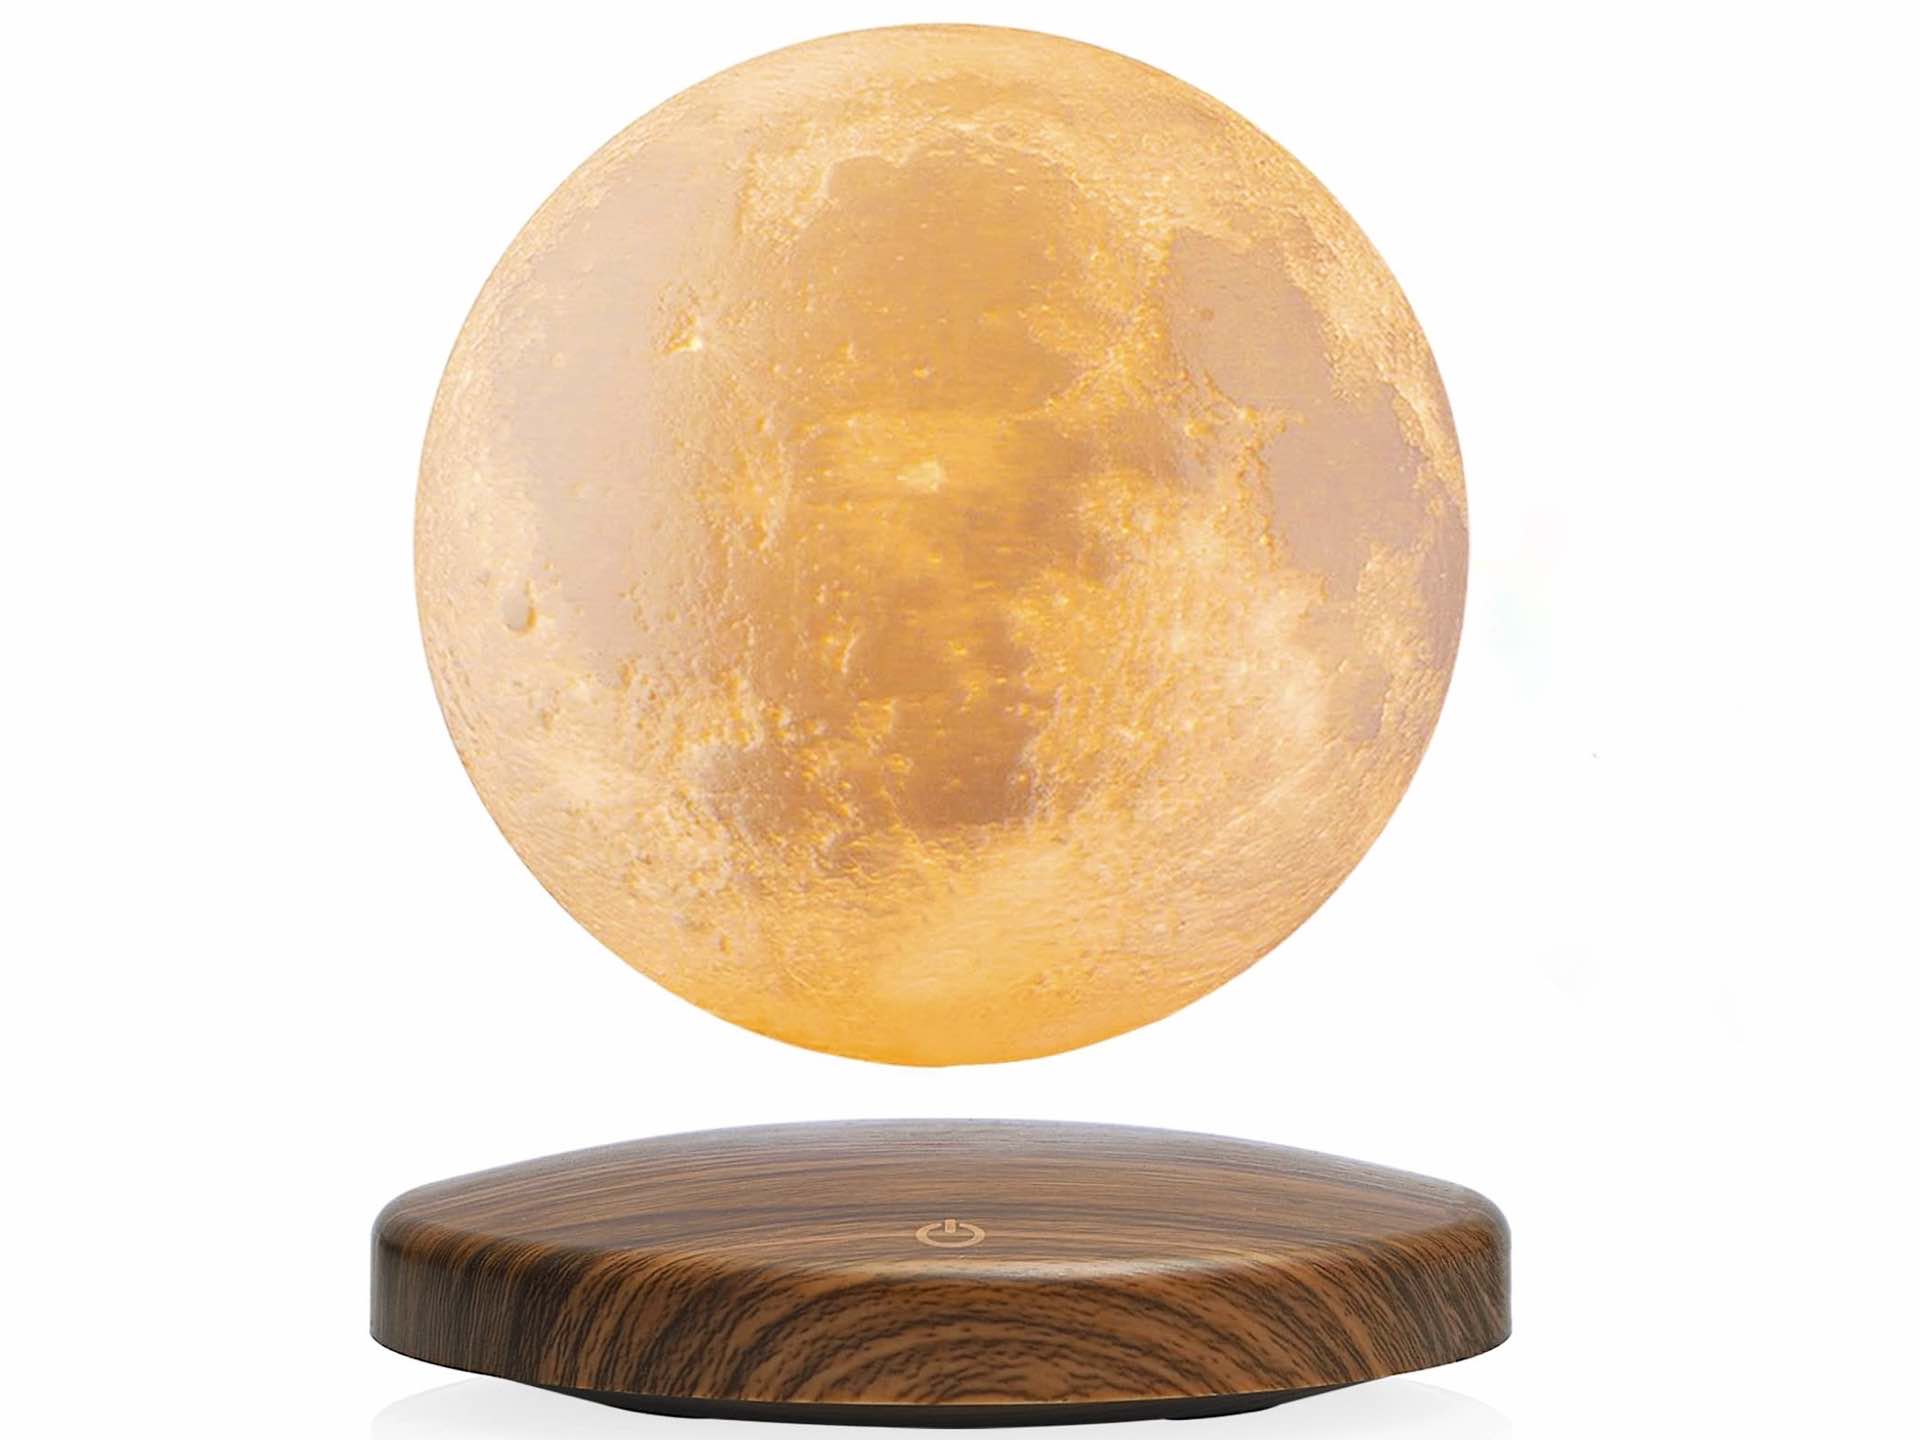 FIRPOW levitating moon lamp. ($107)